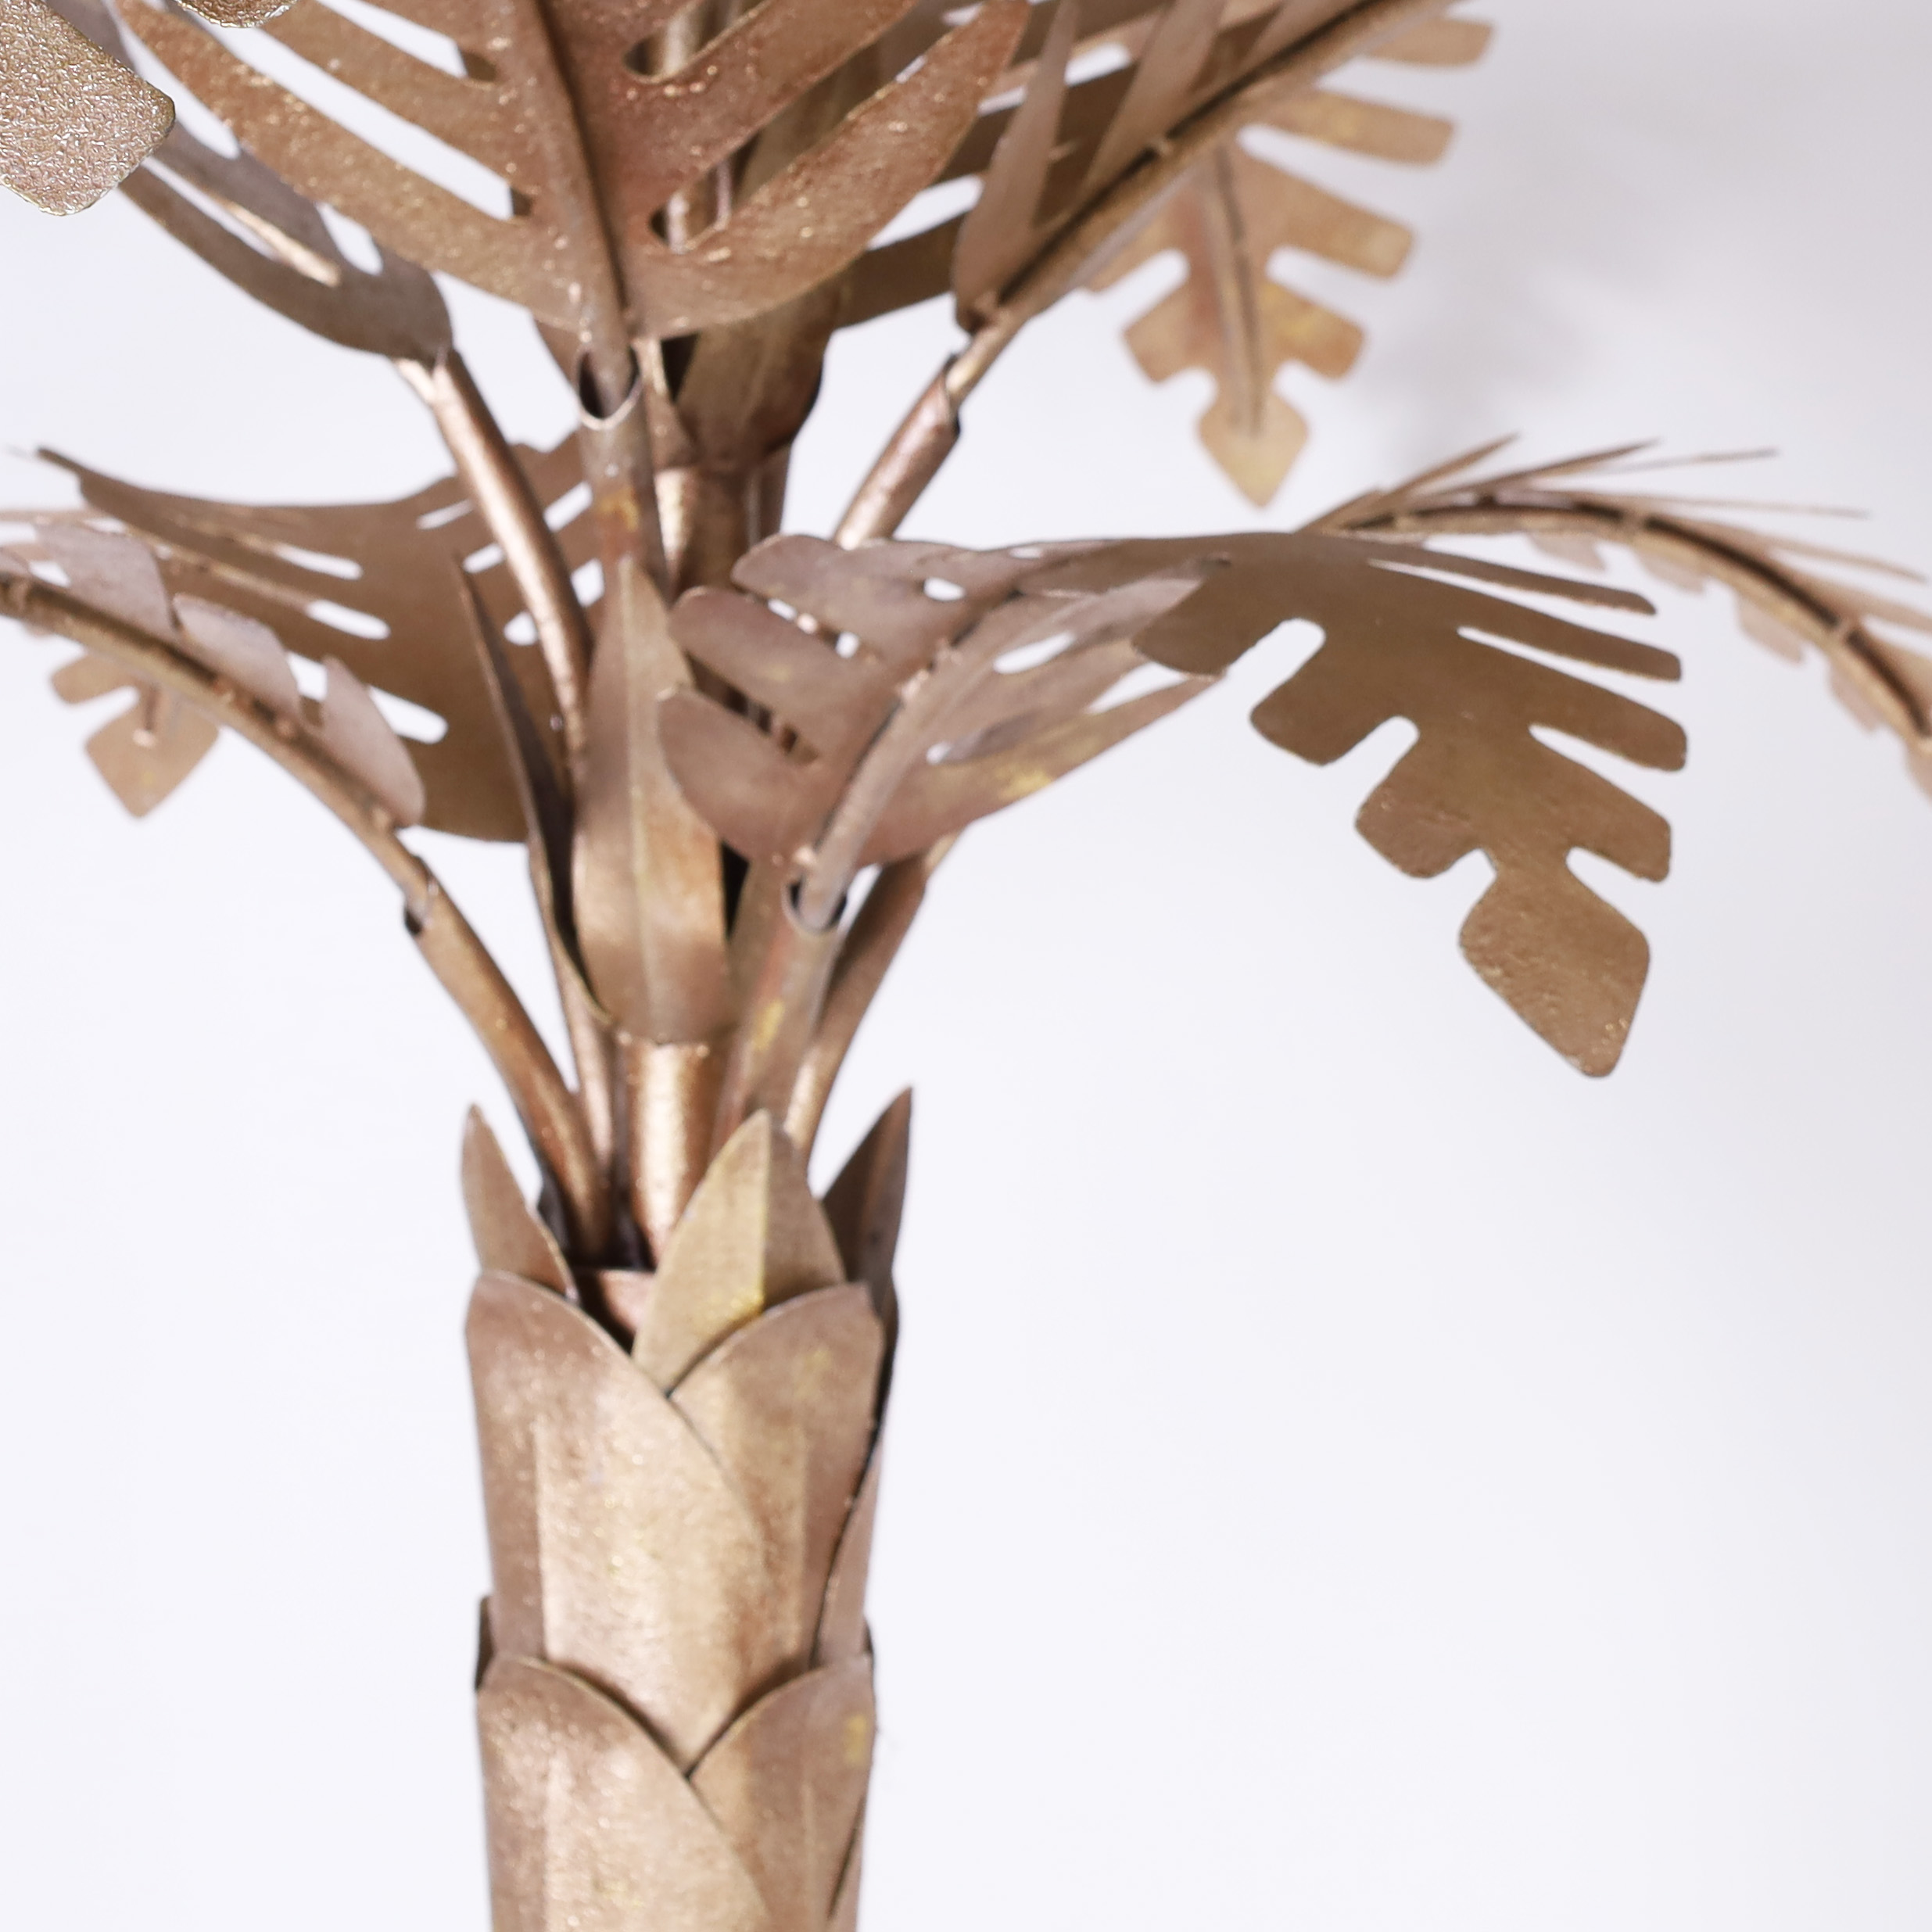 Pair of Life Size Vintage Metal Palm Tree Sculptures